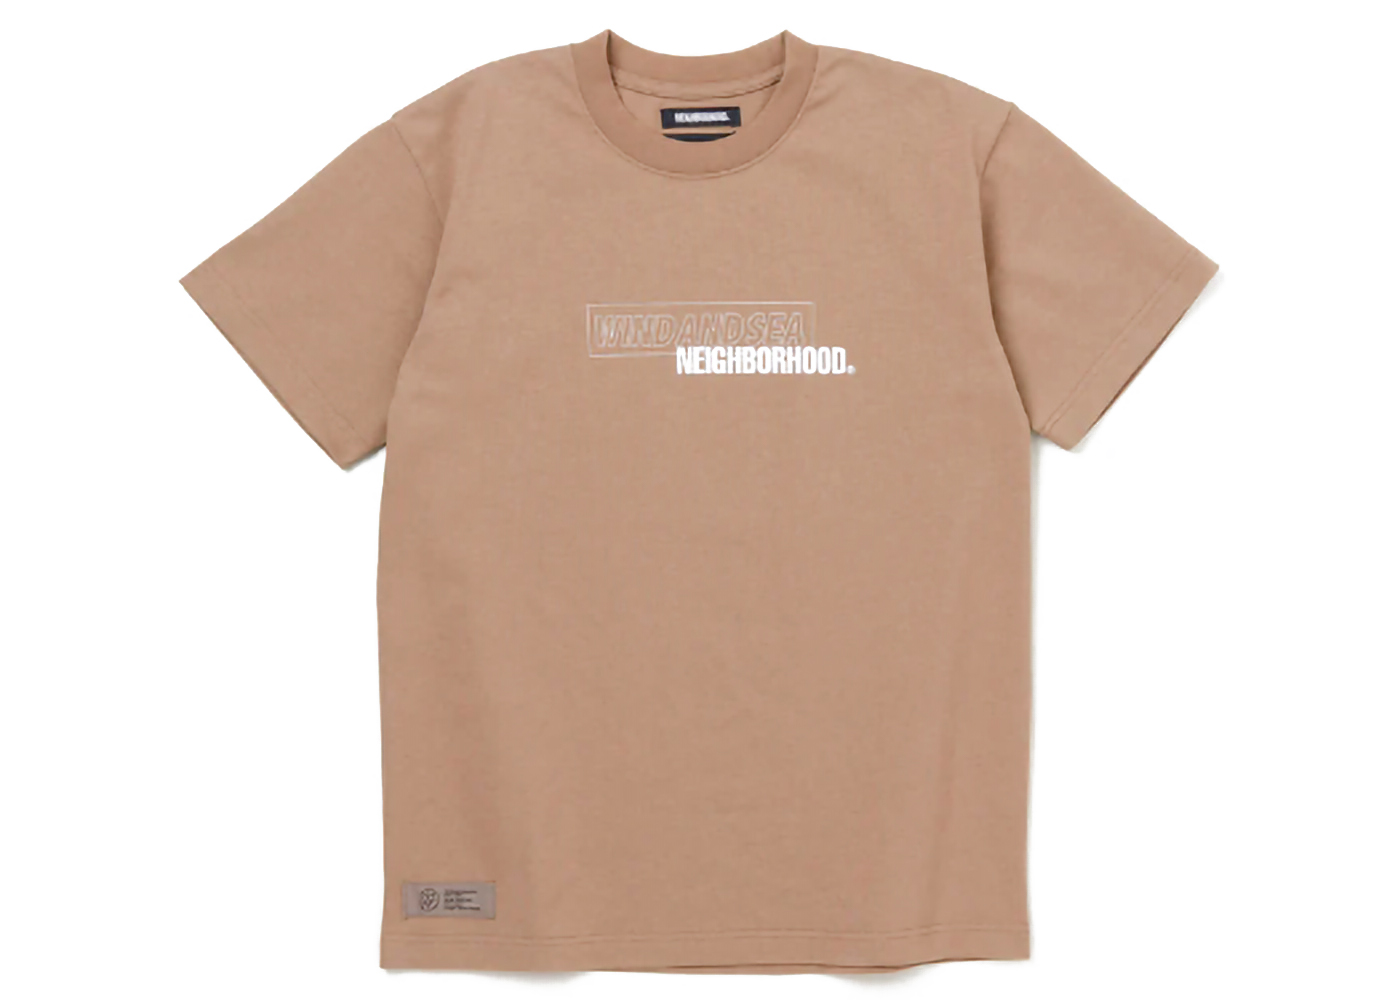 【XL】WIND AND SEA x NEIGHBORHOOD shirts